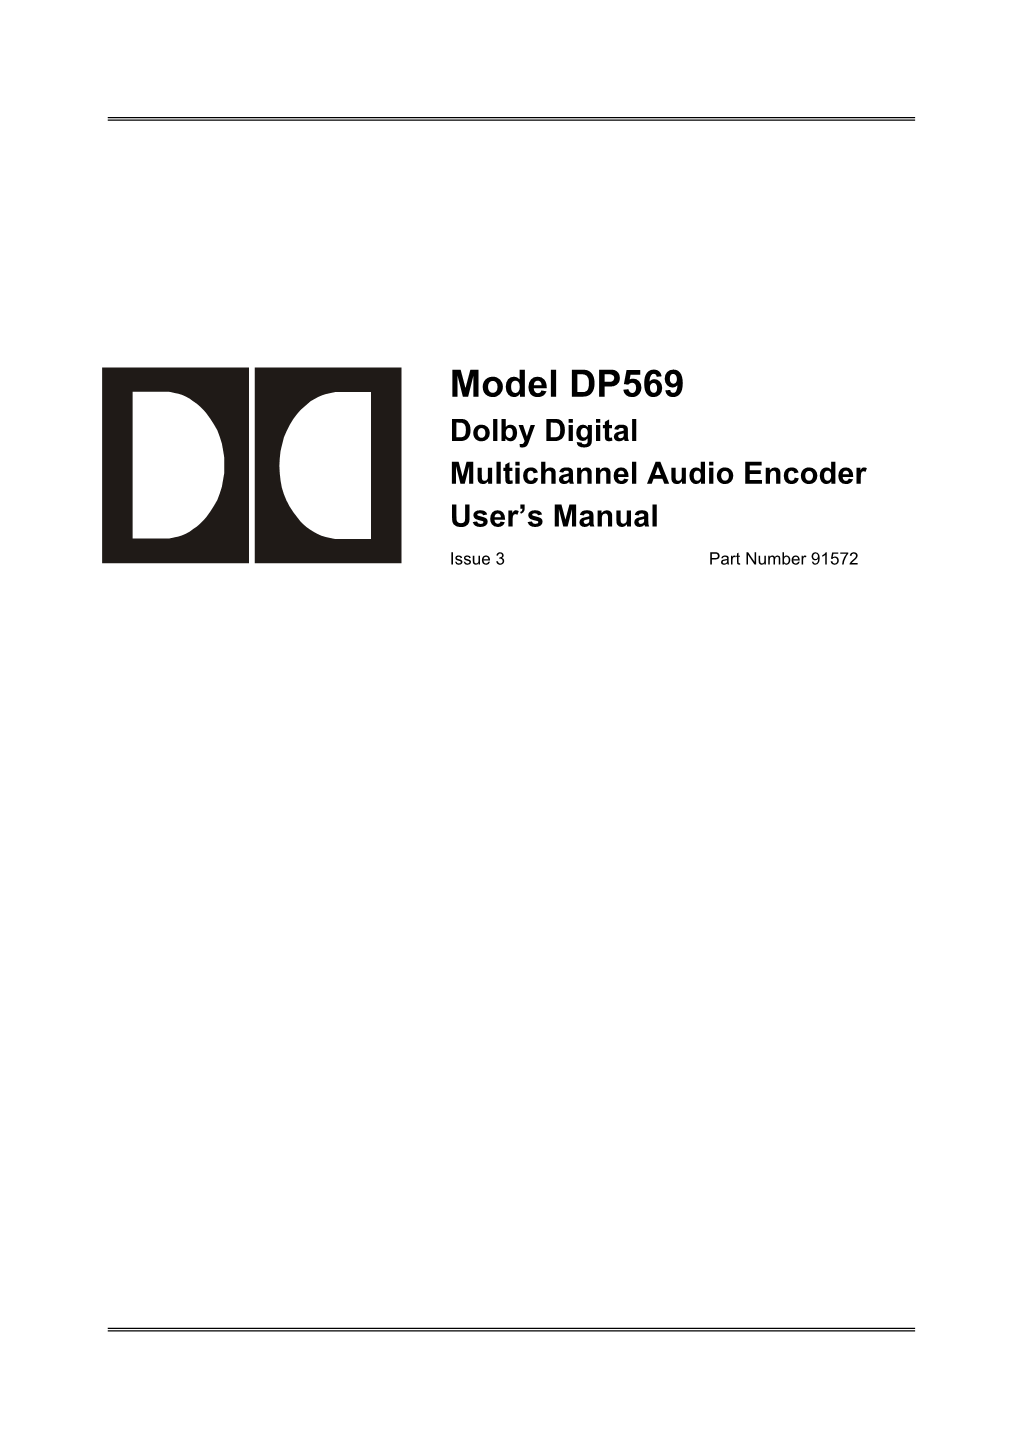 Model DP569 Dolby Digital Multichannel Audio Encoder User's Manual